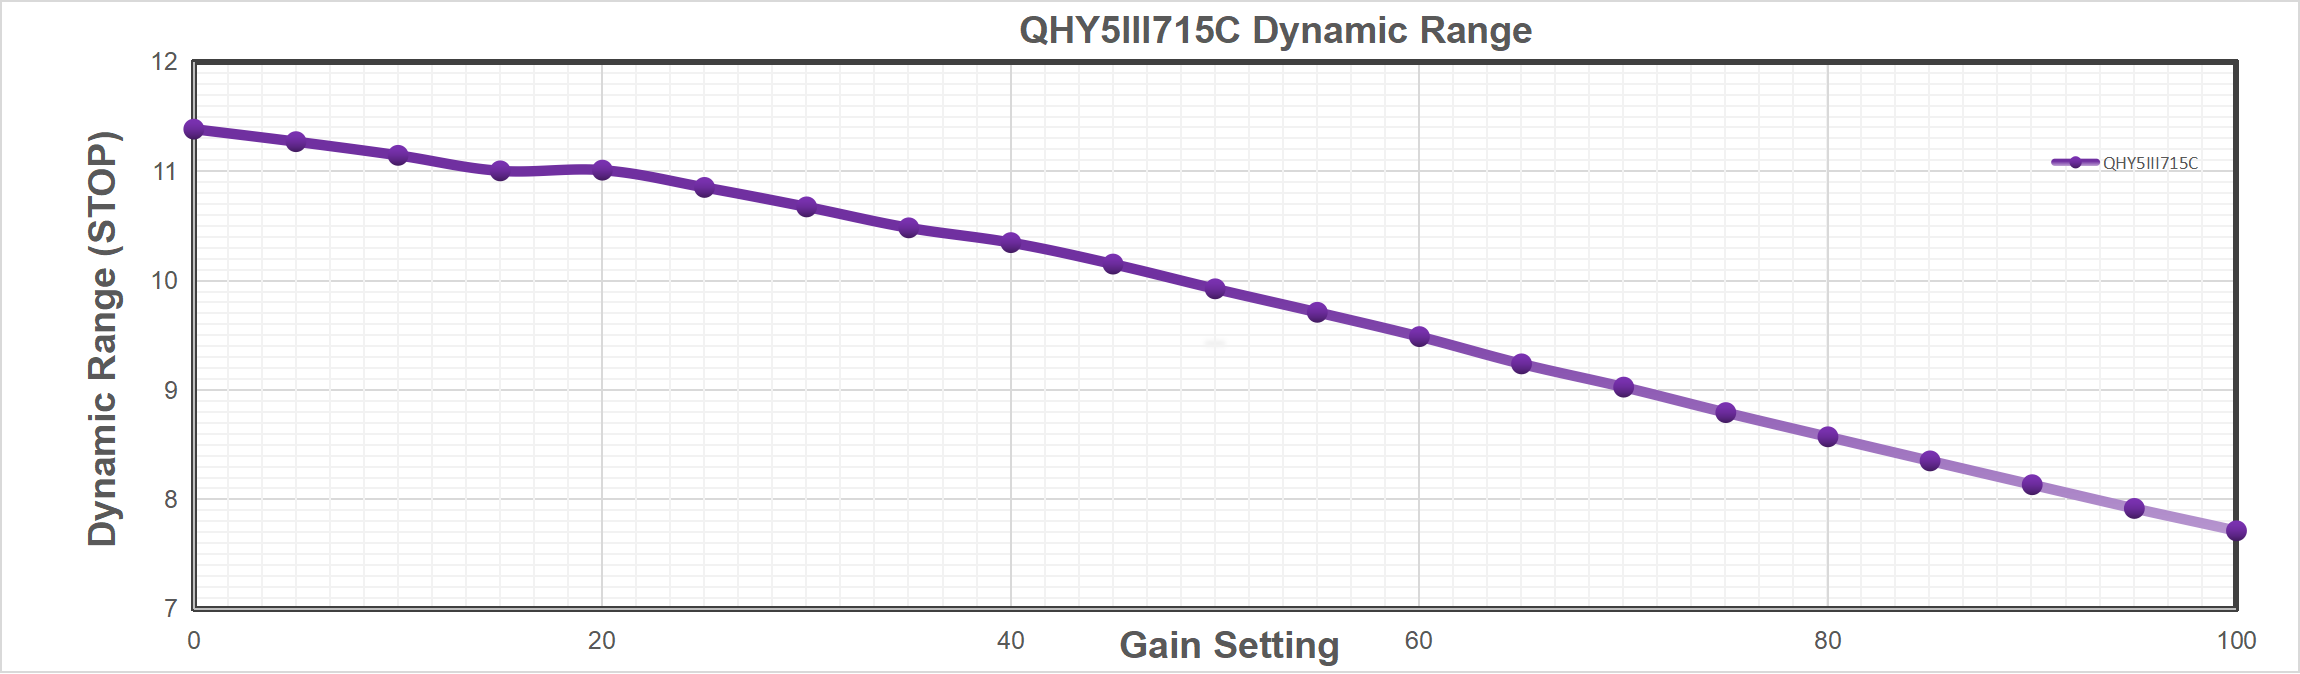 QHY-5III-715C Dynamic Range